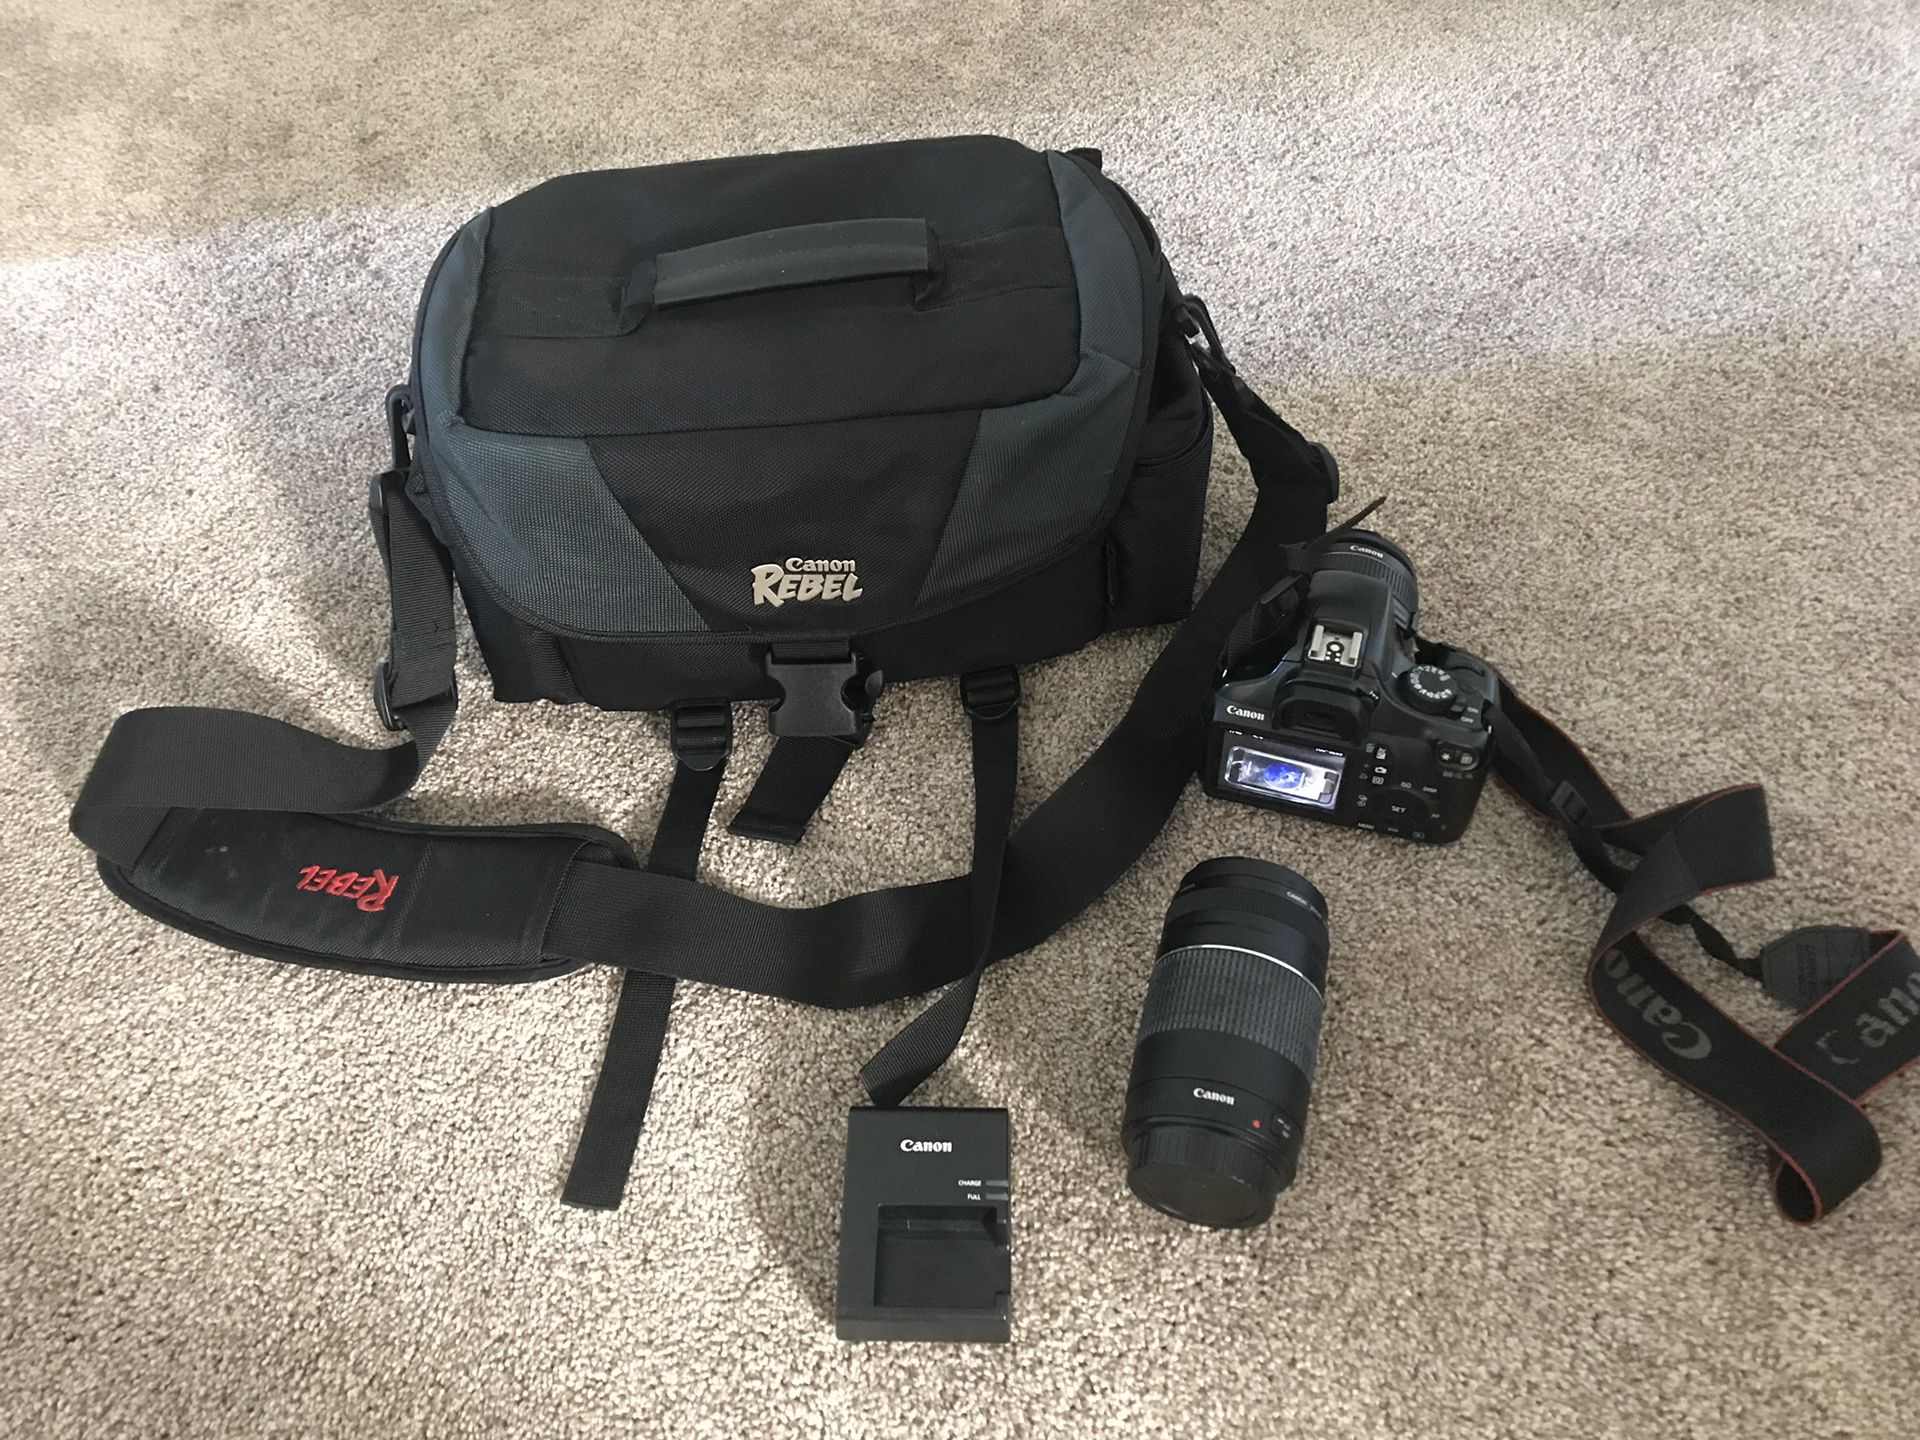 Canon Rebel T3 camera kit